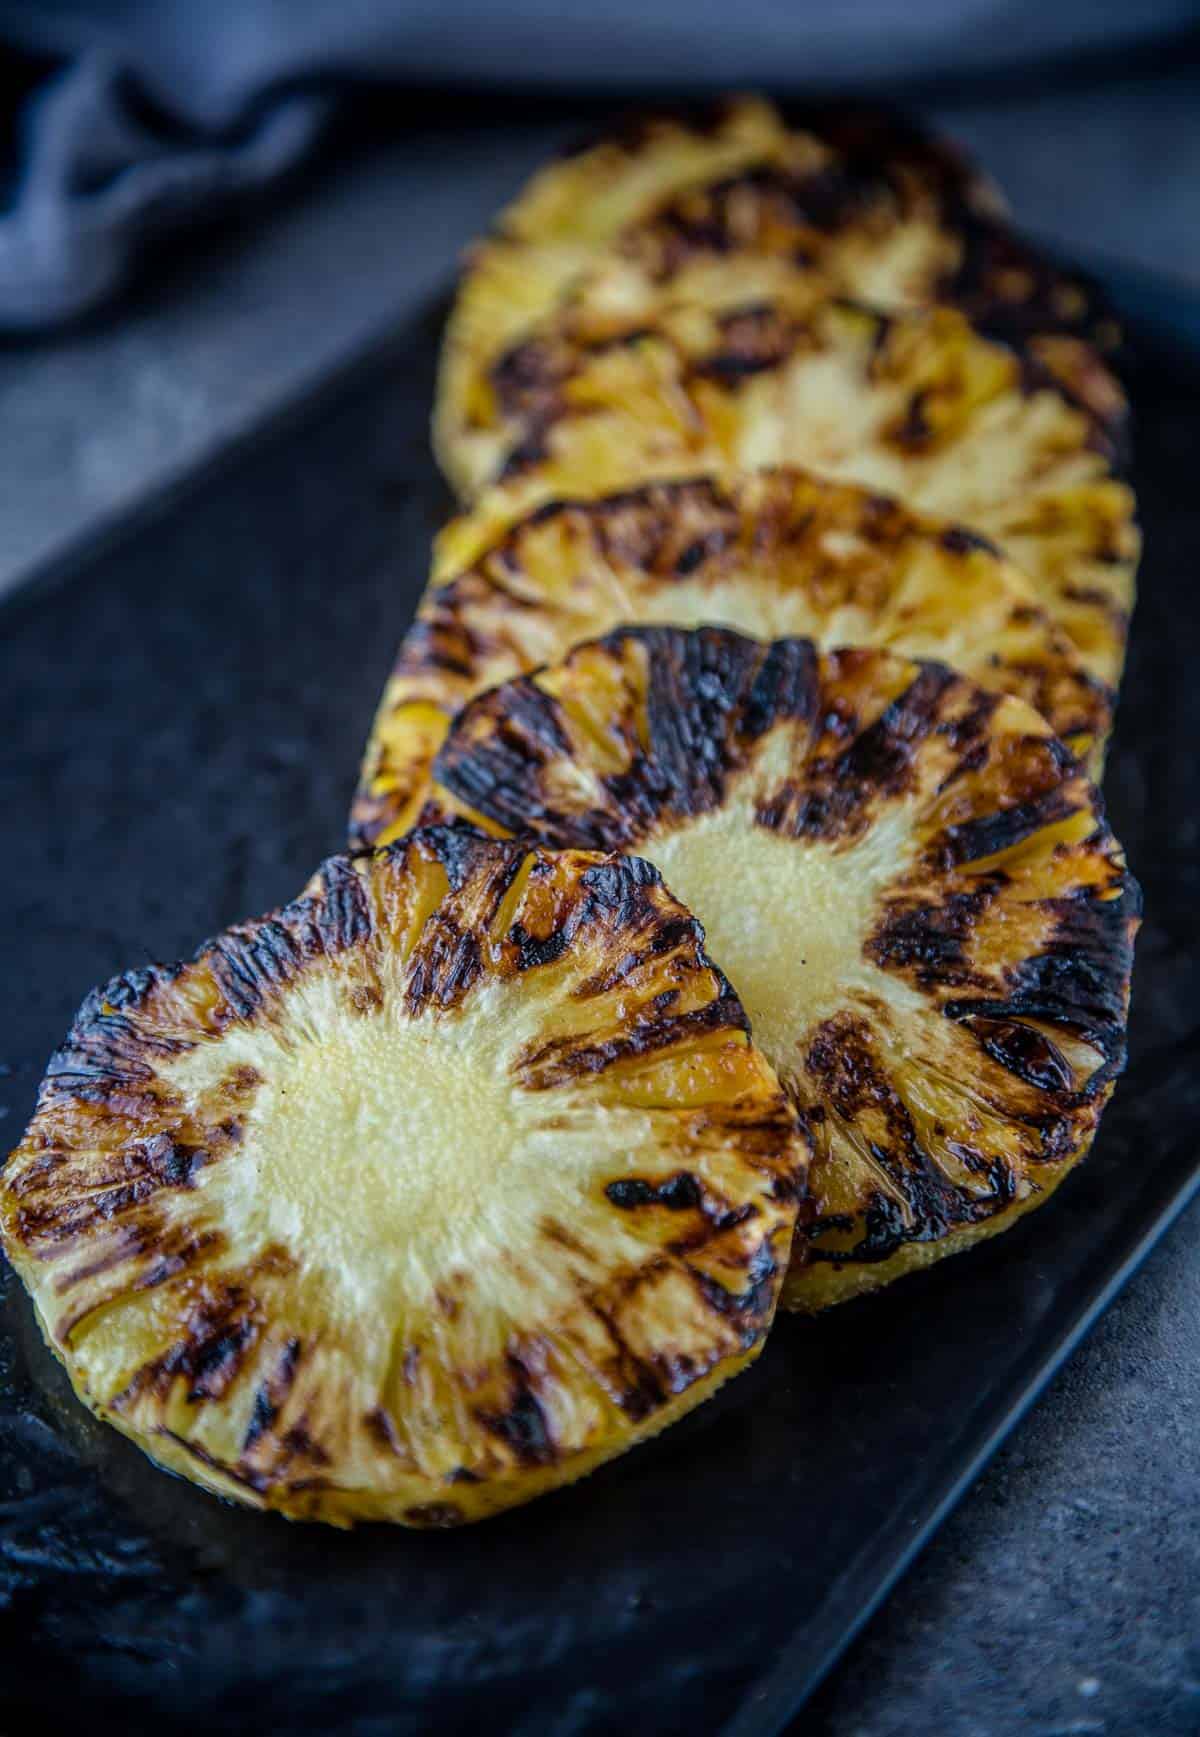 Grilled Pineapple slices on a serving platter